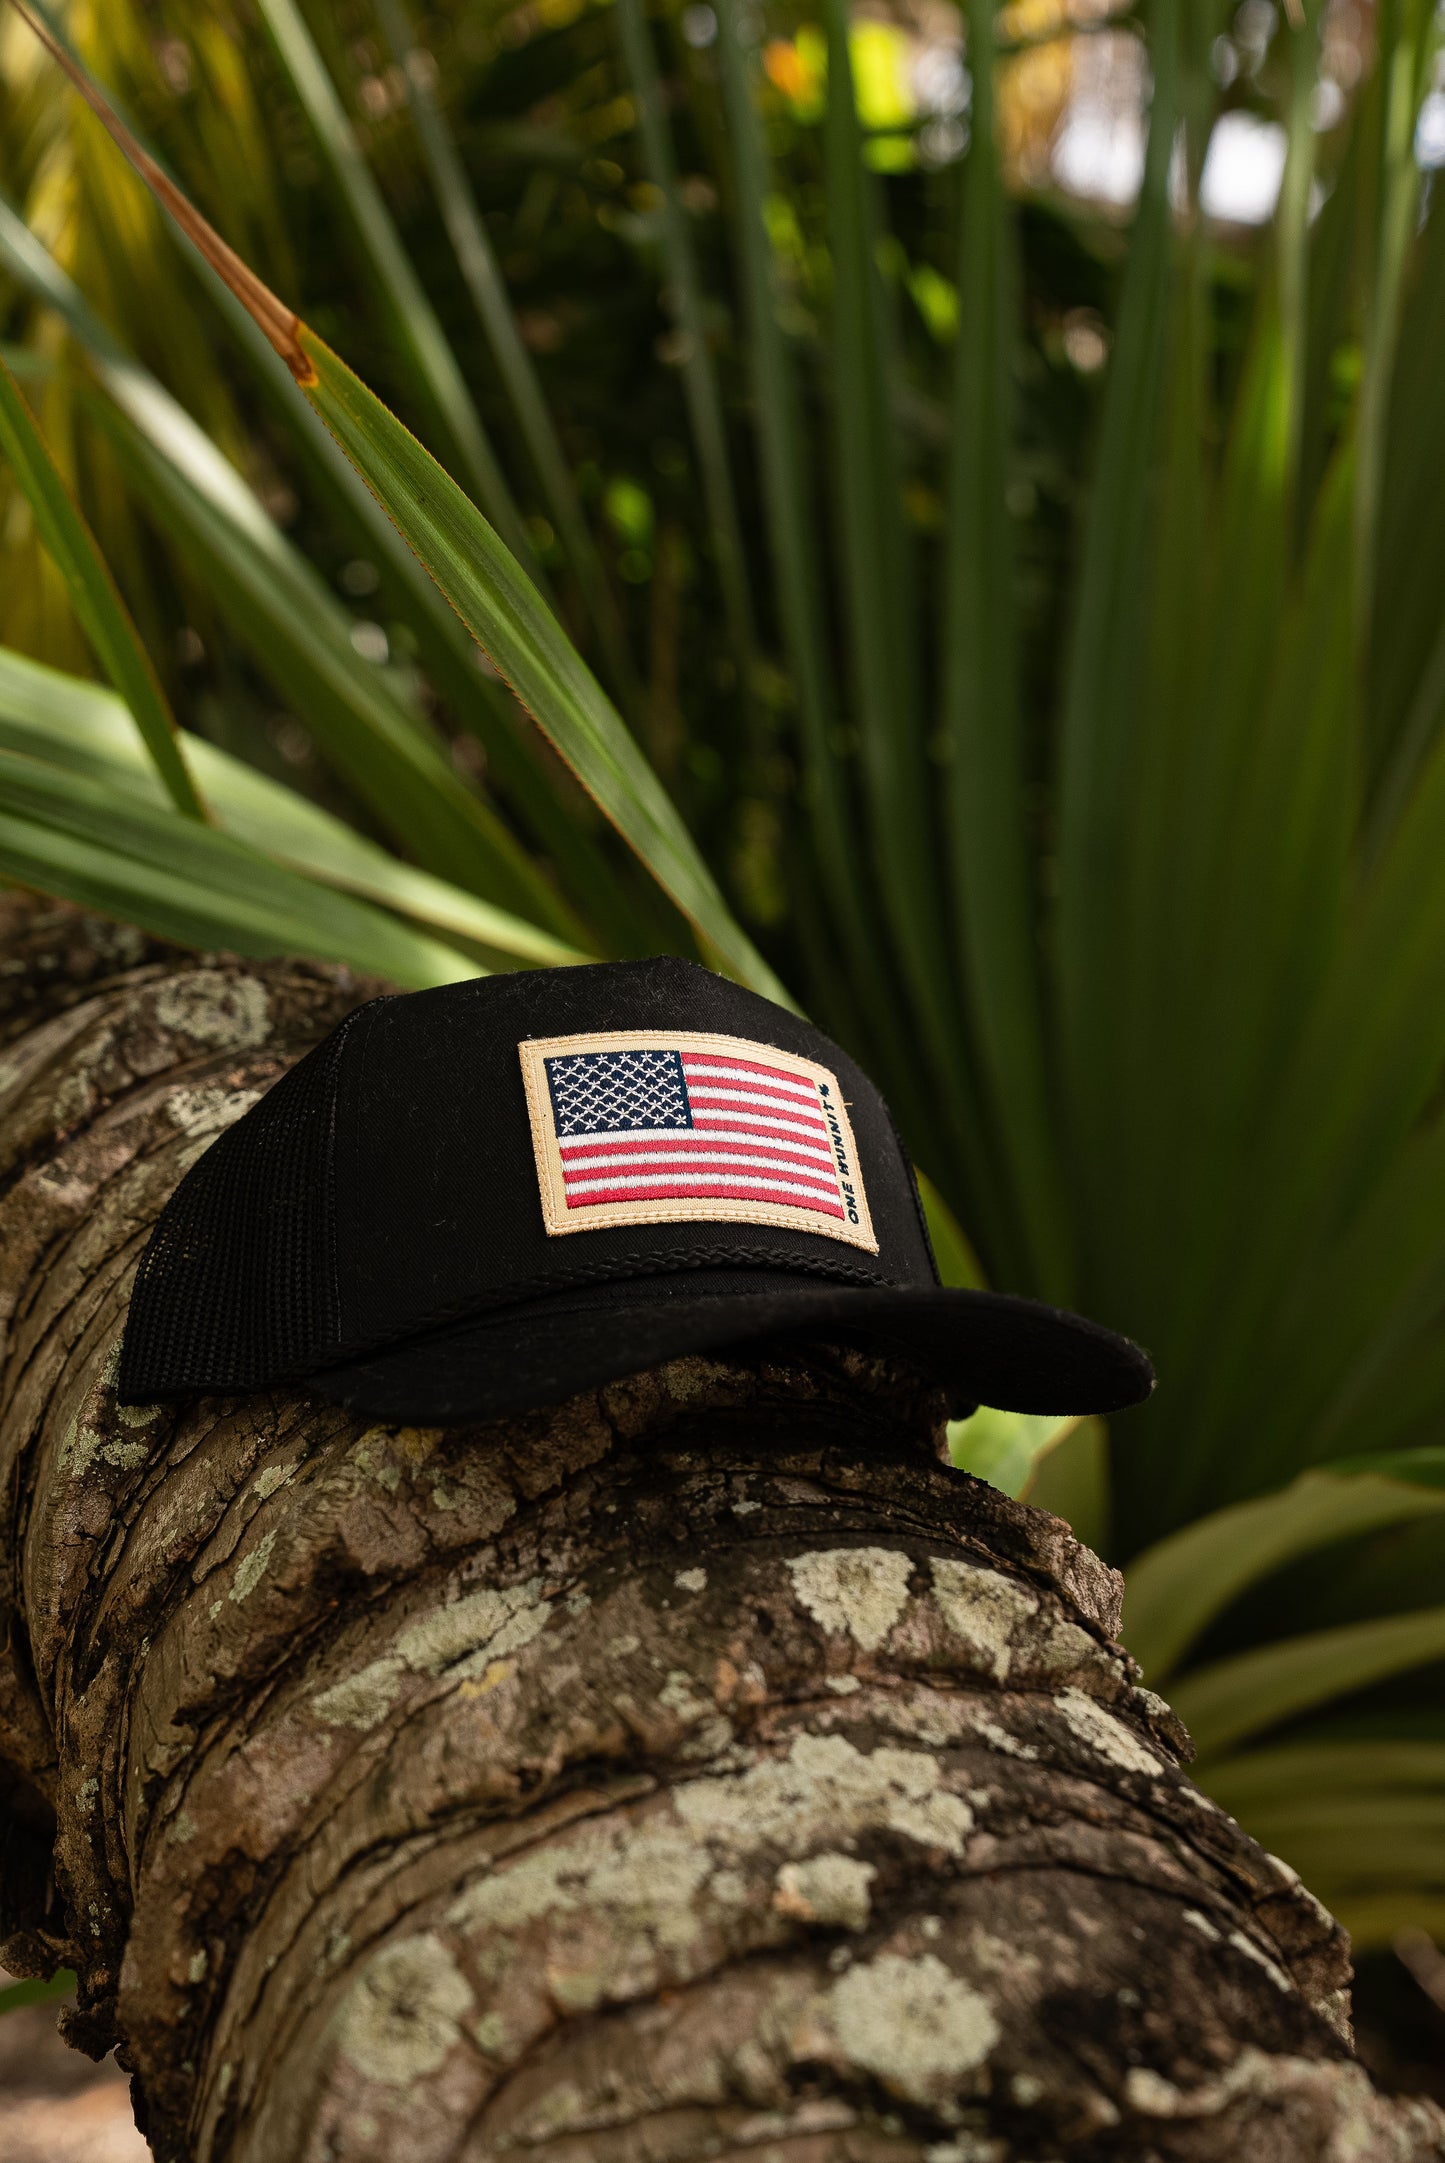 USA Flag Trucker Hat